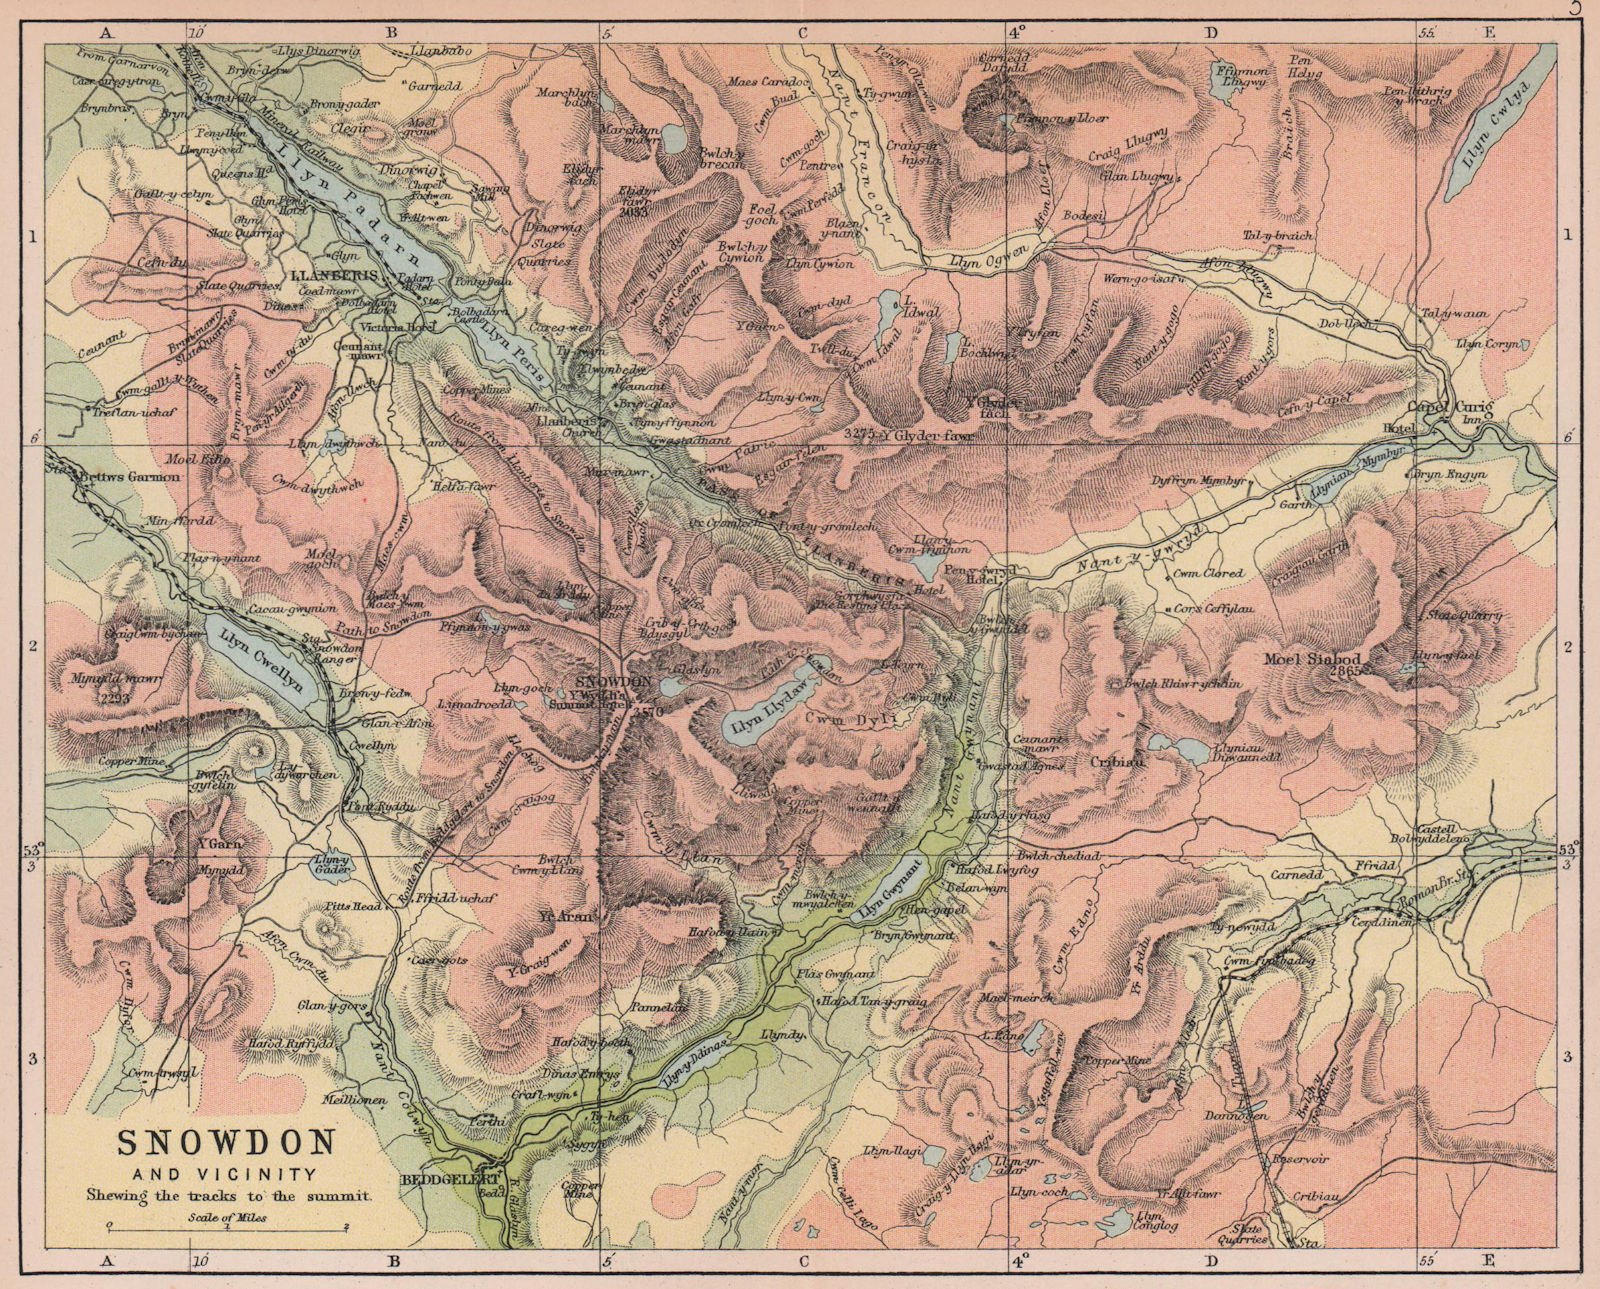 SNOWDONIA Snowdon showing tracks to the Summit Wales BARTHOLOMEW 1882 old map